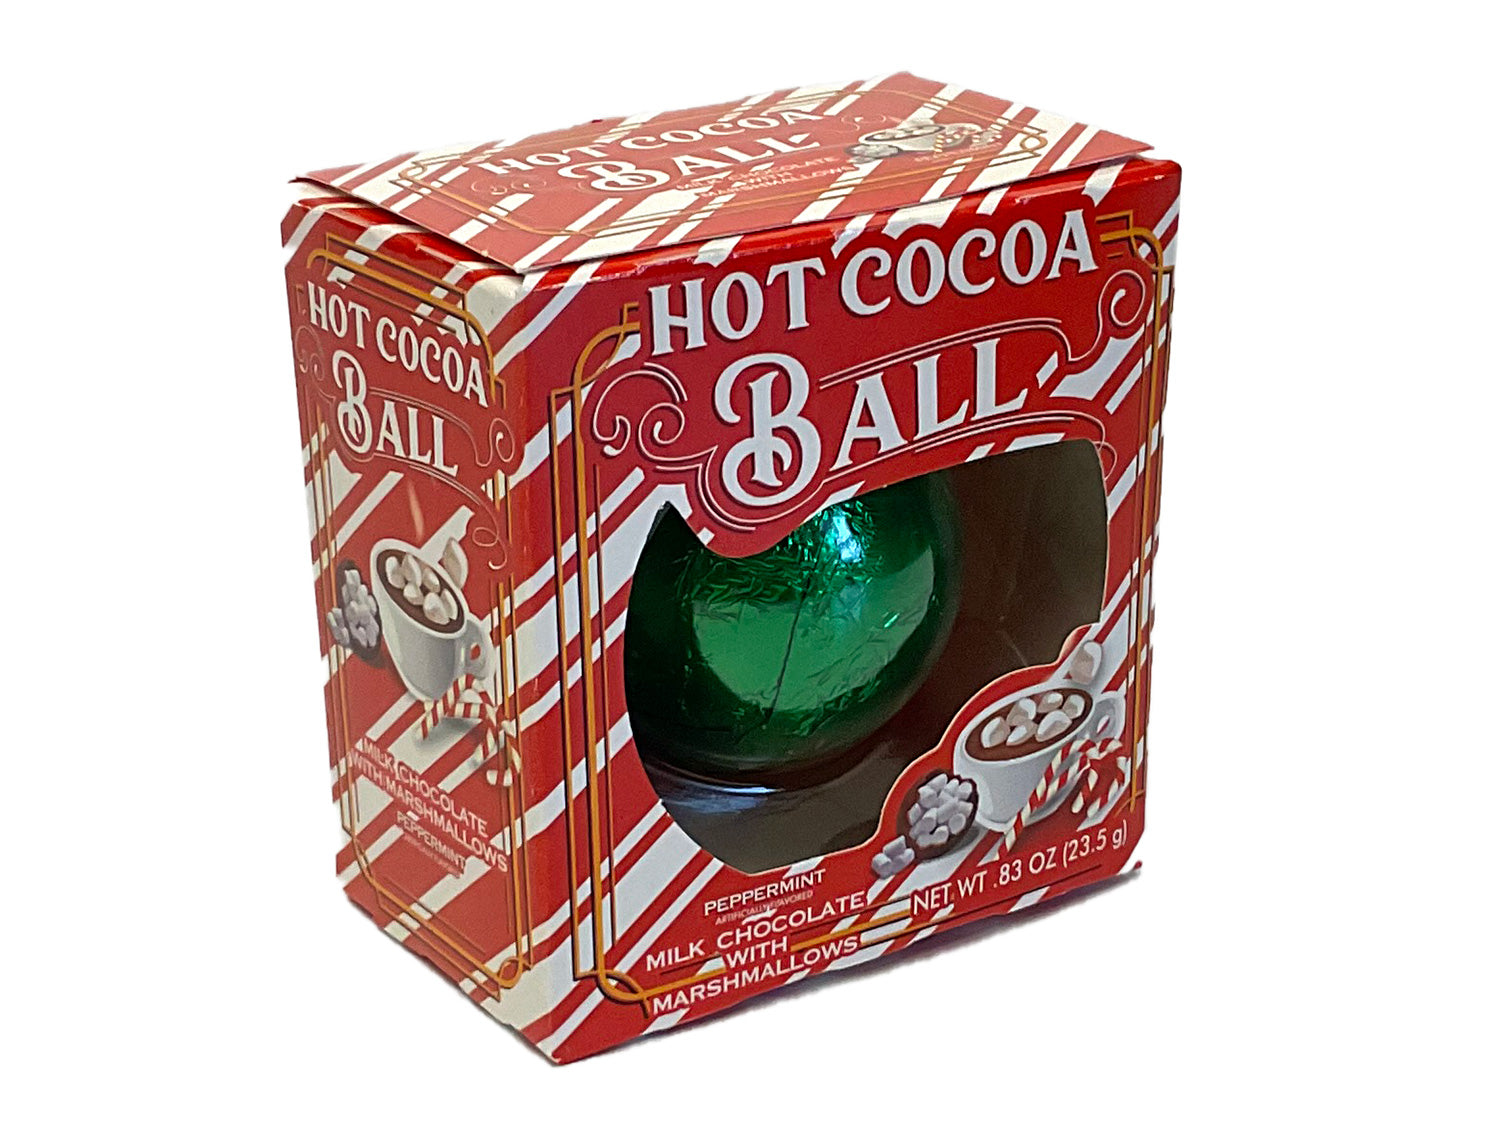 Hot Cocoa Ball - Milk Chocolate Marshmallow - 0.83 oz